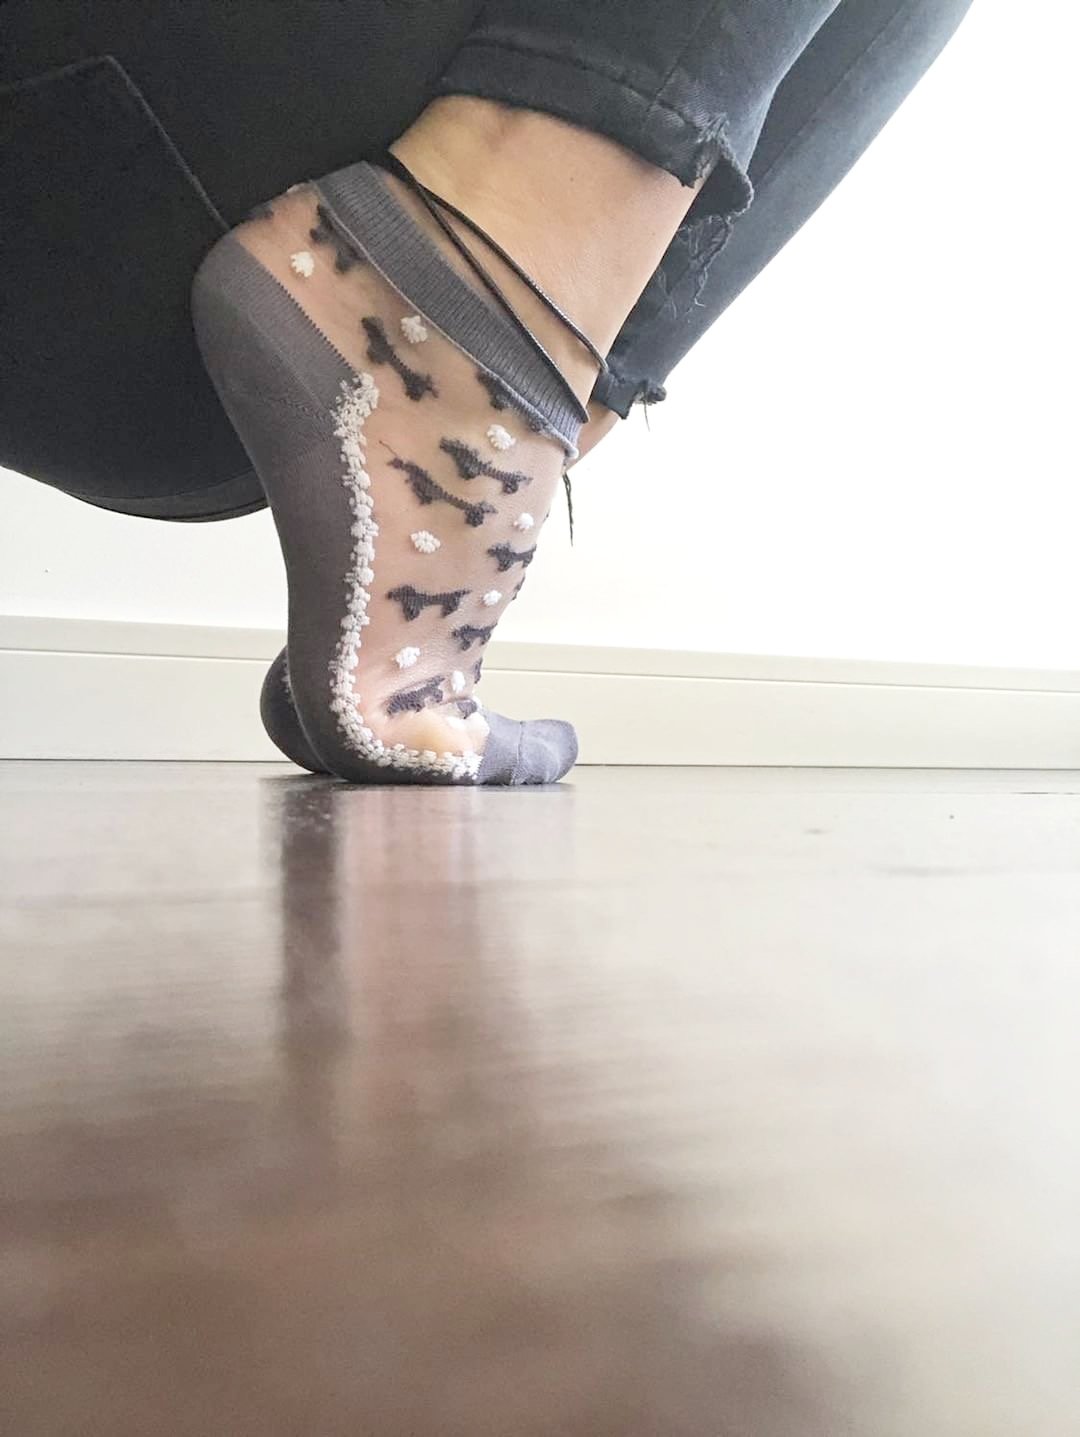 Adorable Grey Puppies Sheer Socks - Global Trendz Fashion®